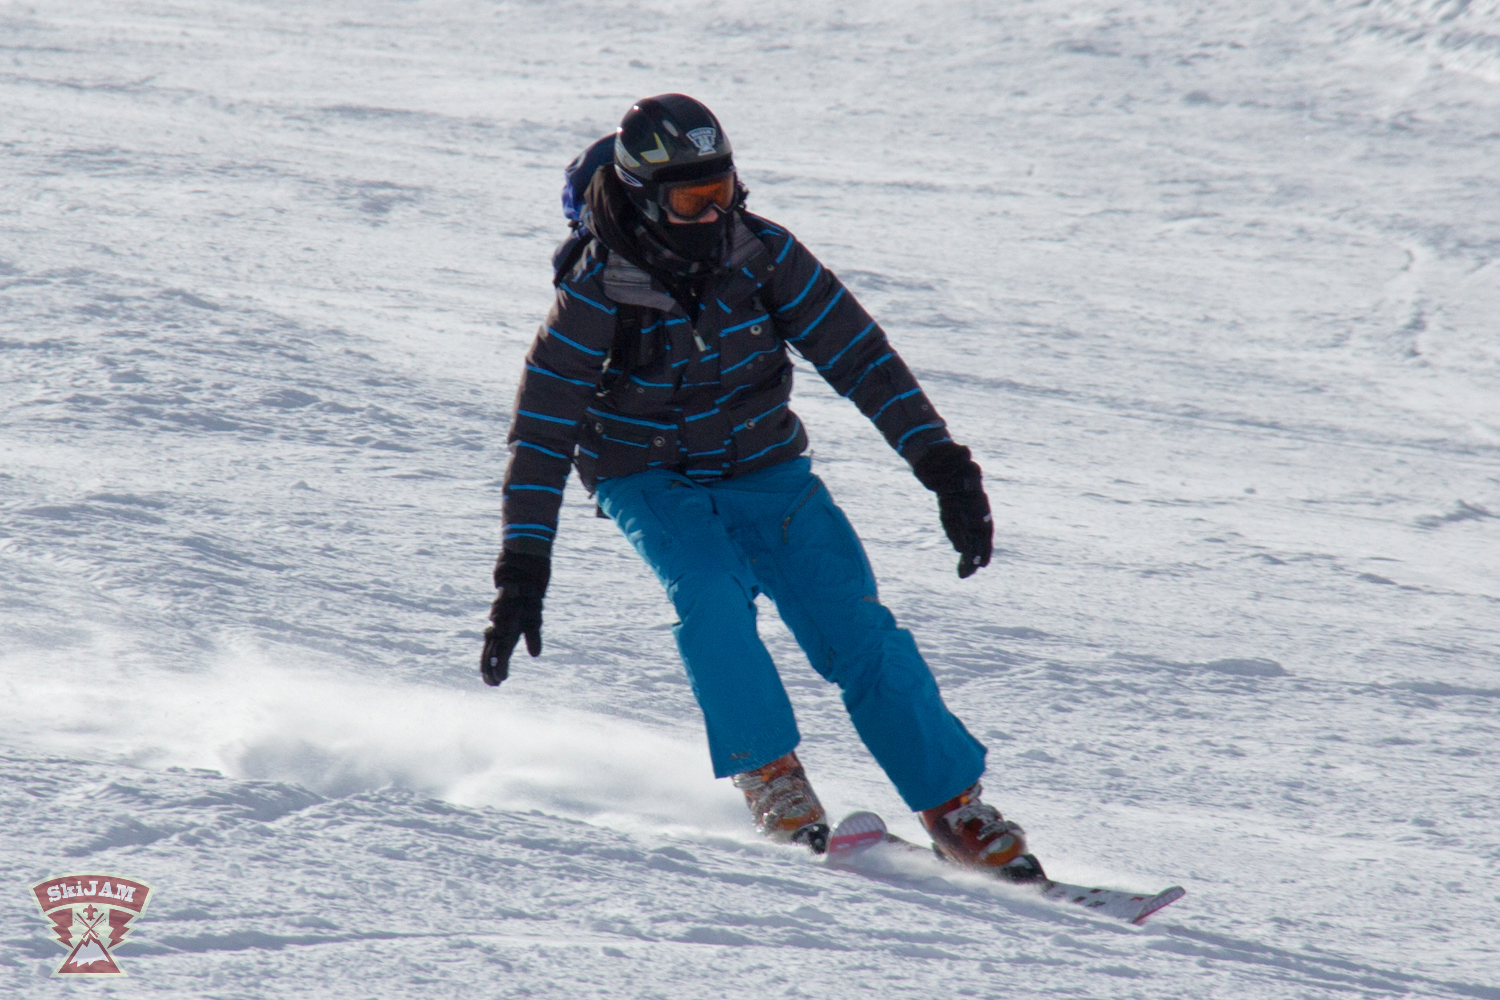 2013-skijam-havasi-mate-019.jpg